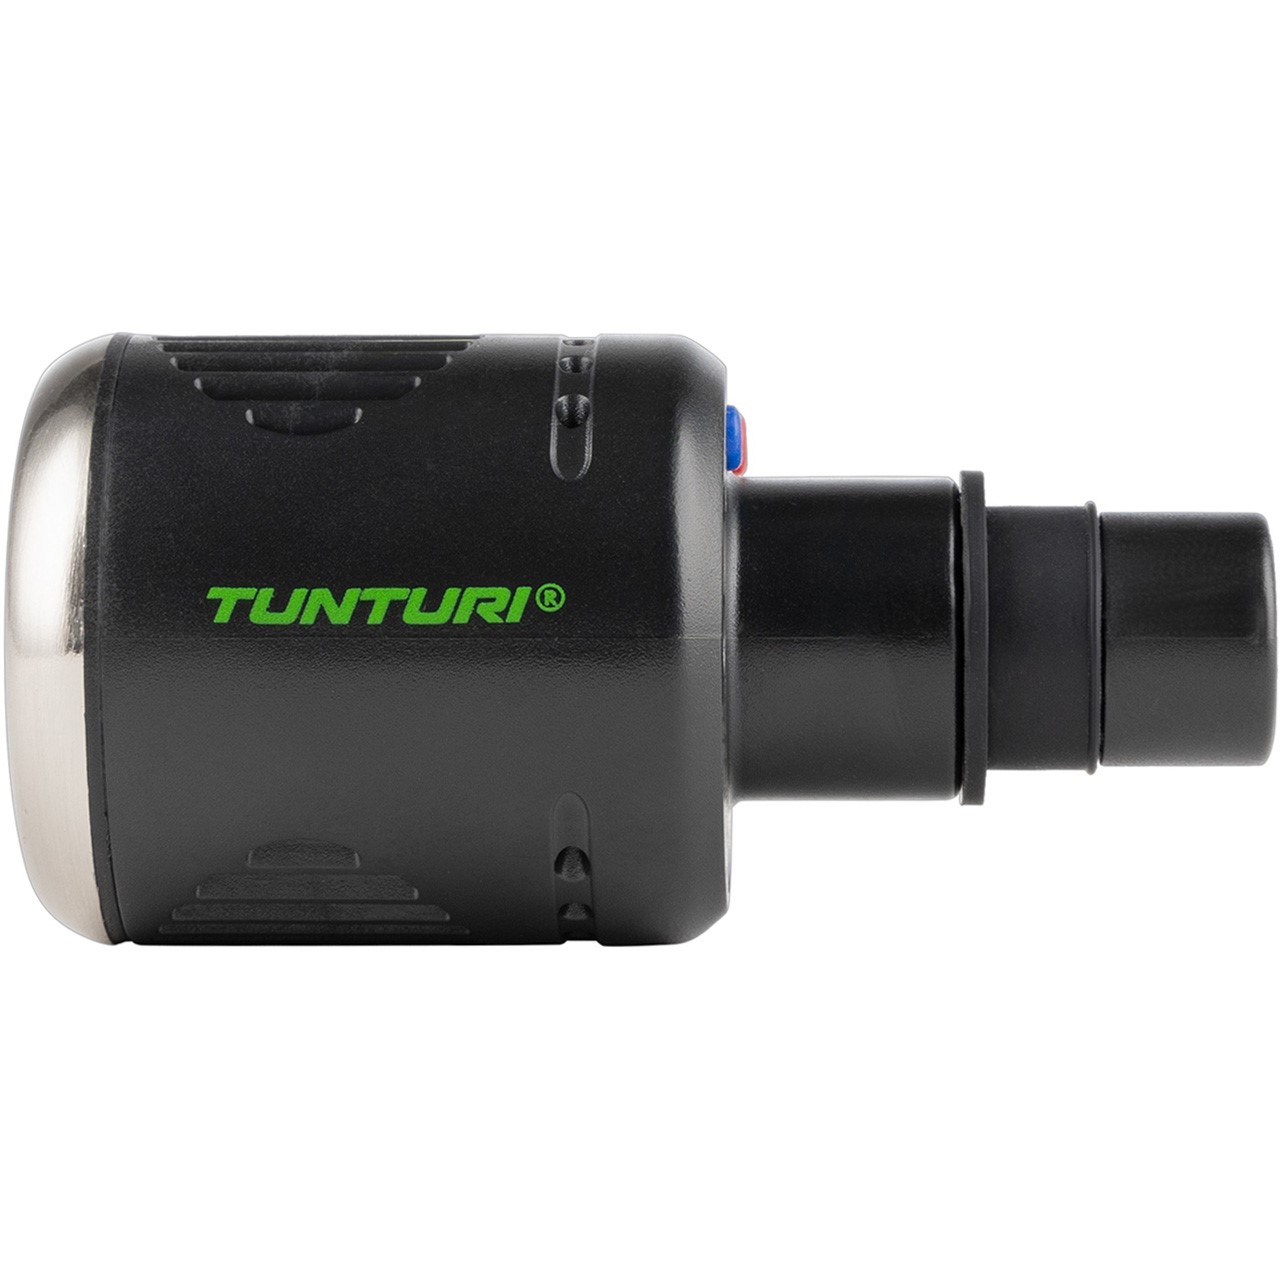 Tunturi Head for Massage Gun, Heat and Cool